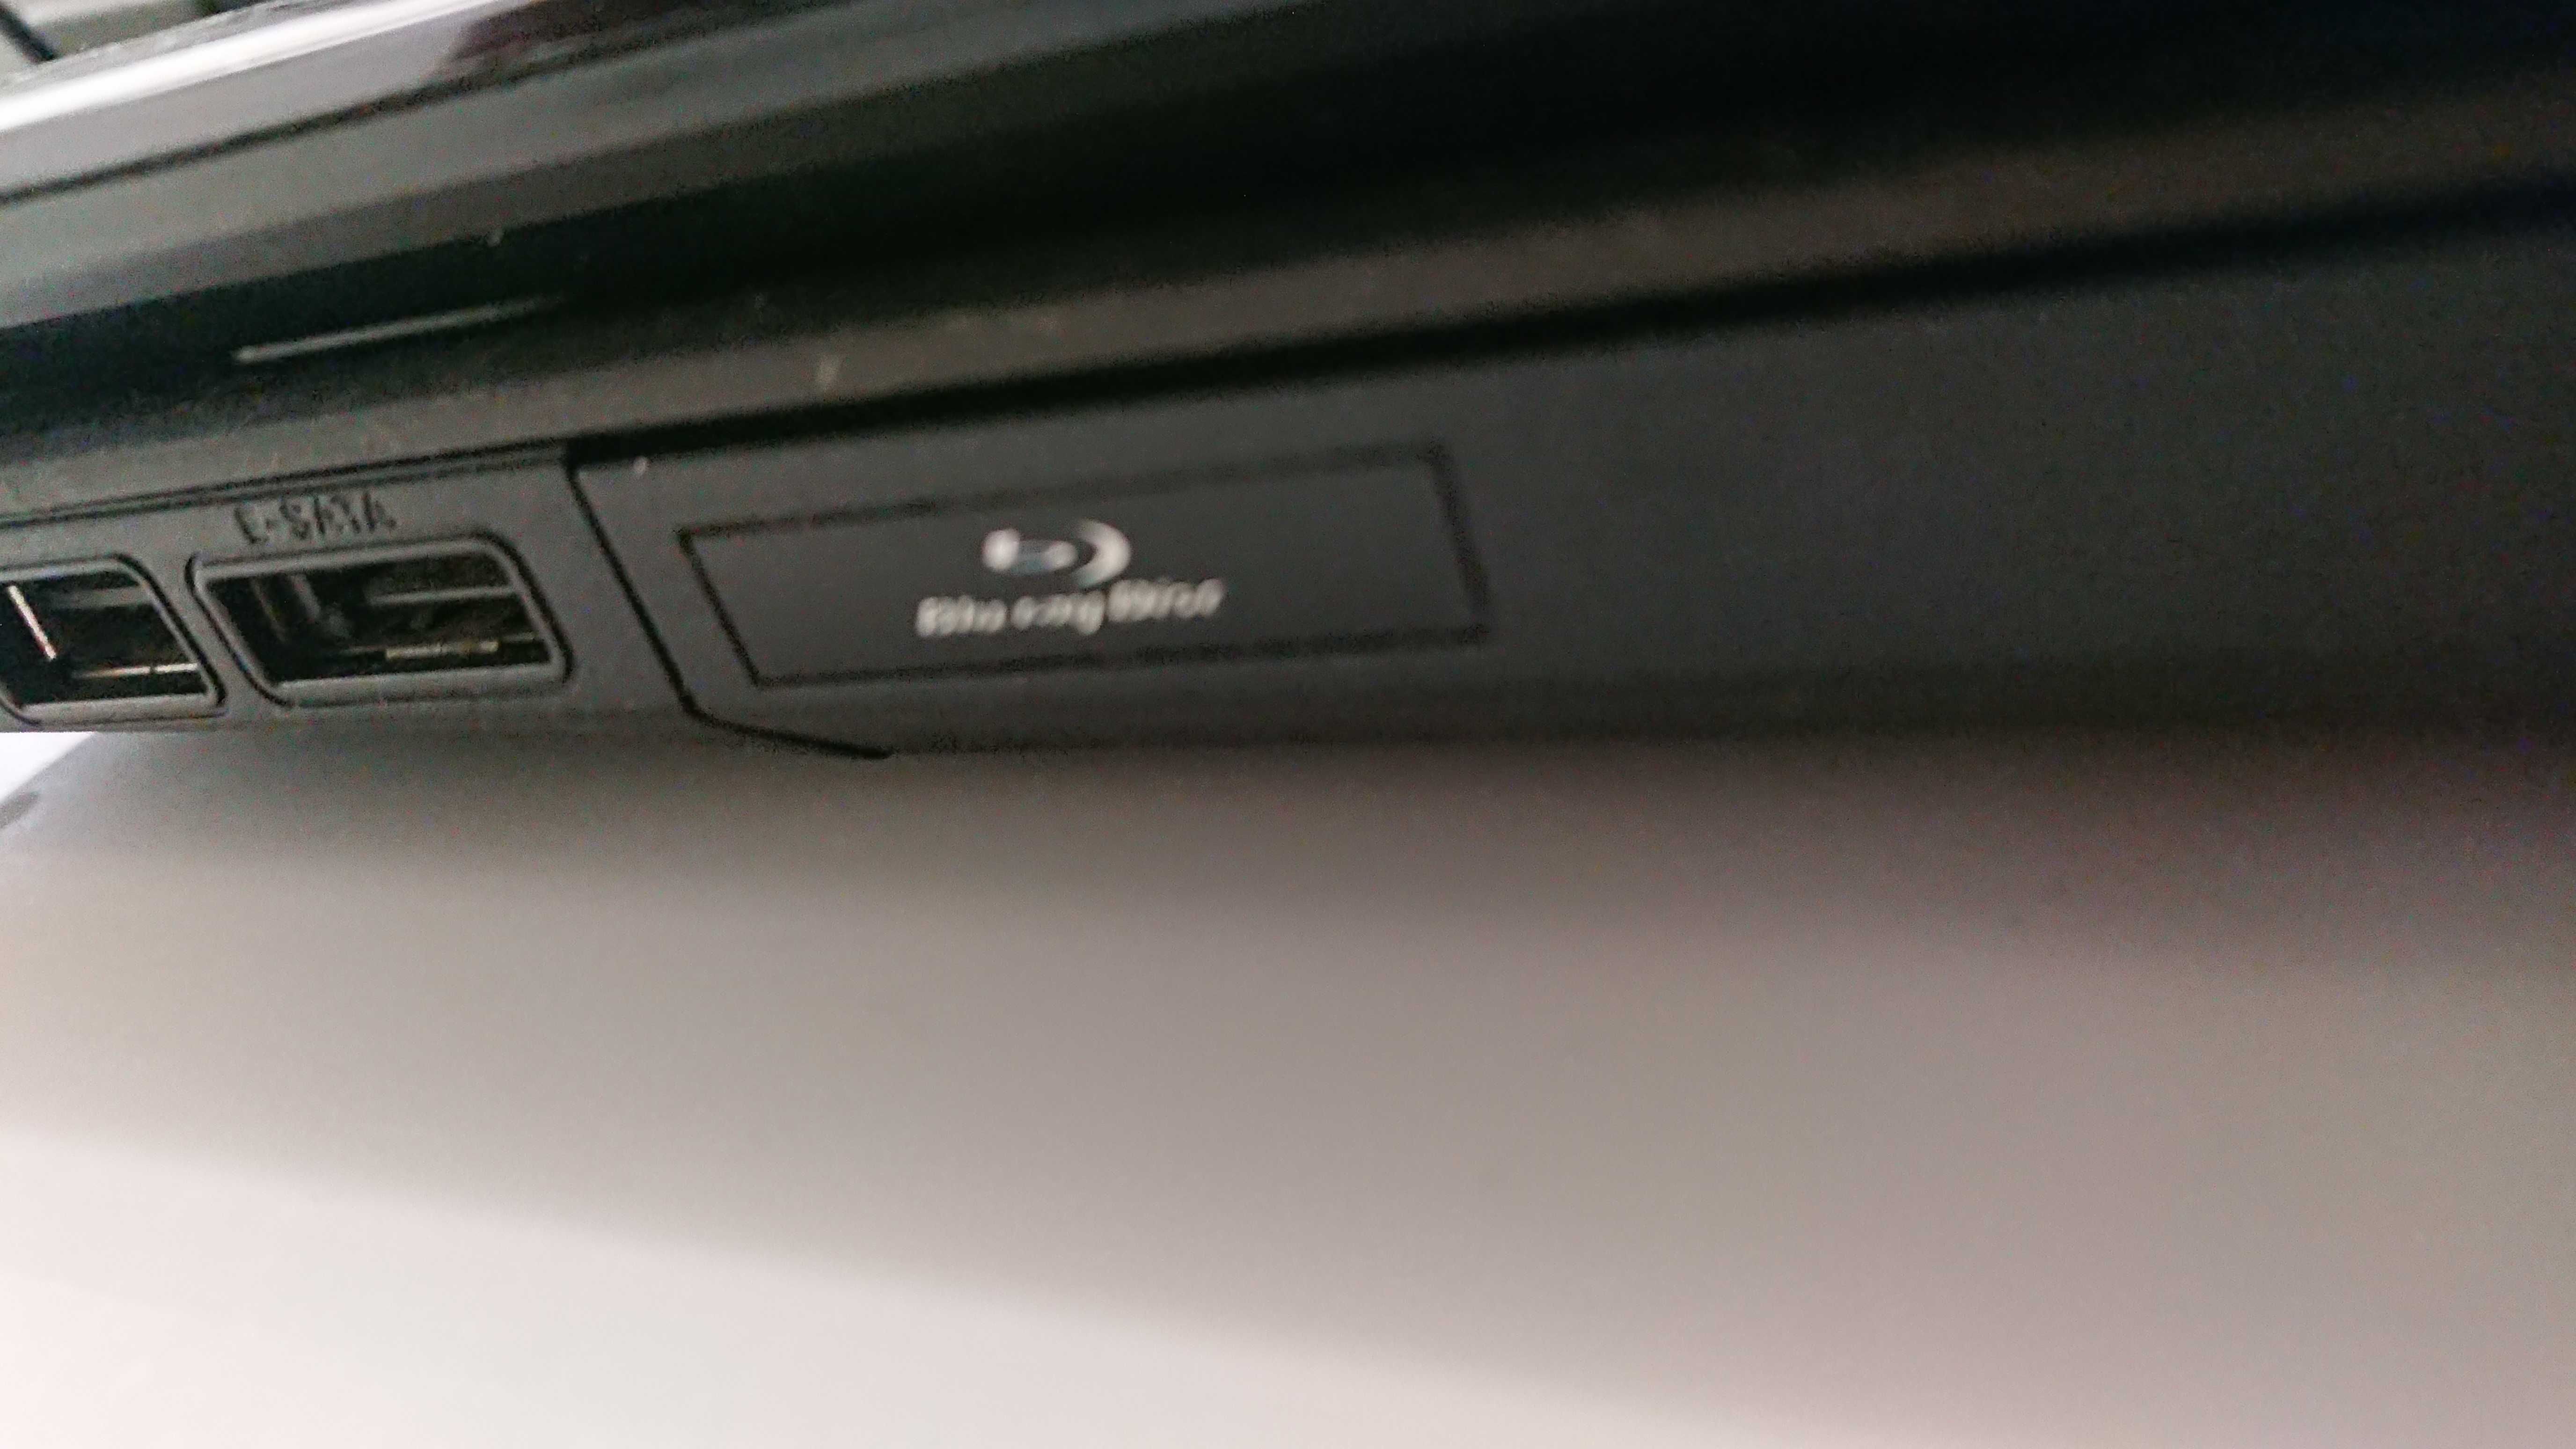 Vand laptop ASUS N61q i7 pentru piese , functioneaza doar pe HDMI